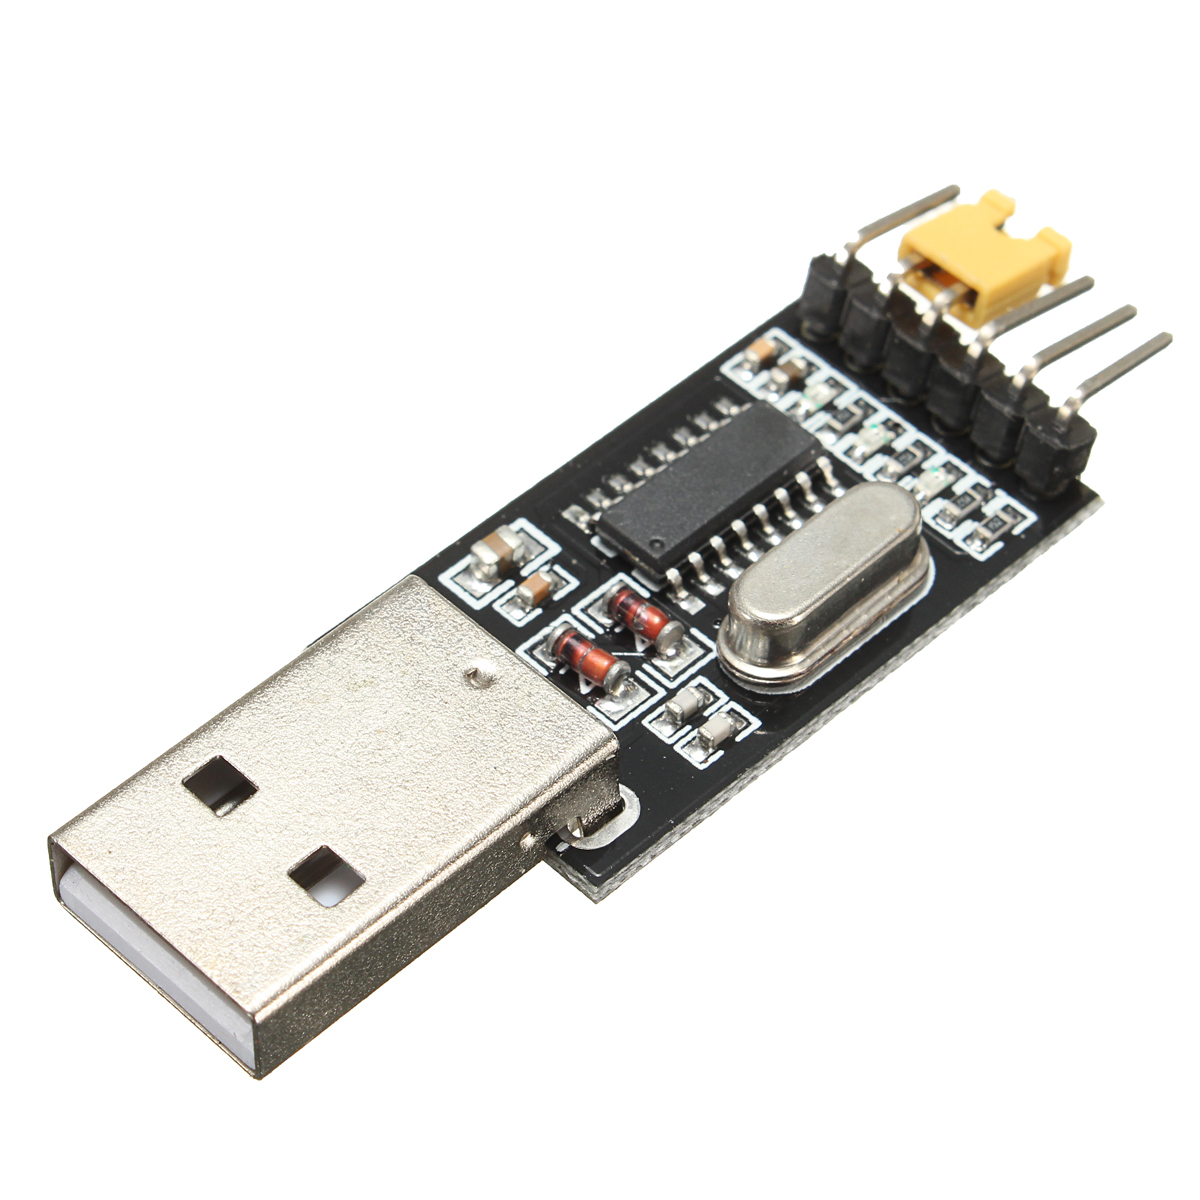 20pcs 3.3V 5V USB to TTL Converter CH340G UART Serial Adapter Module STC 1